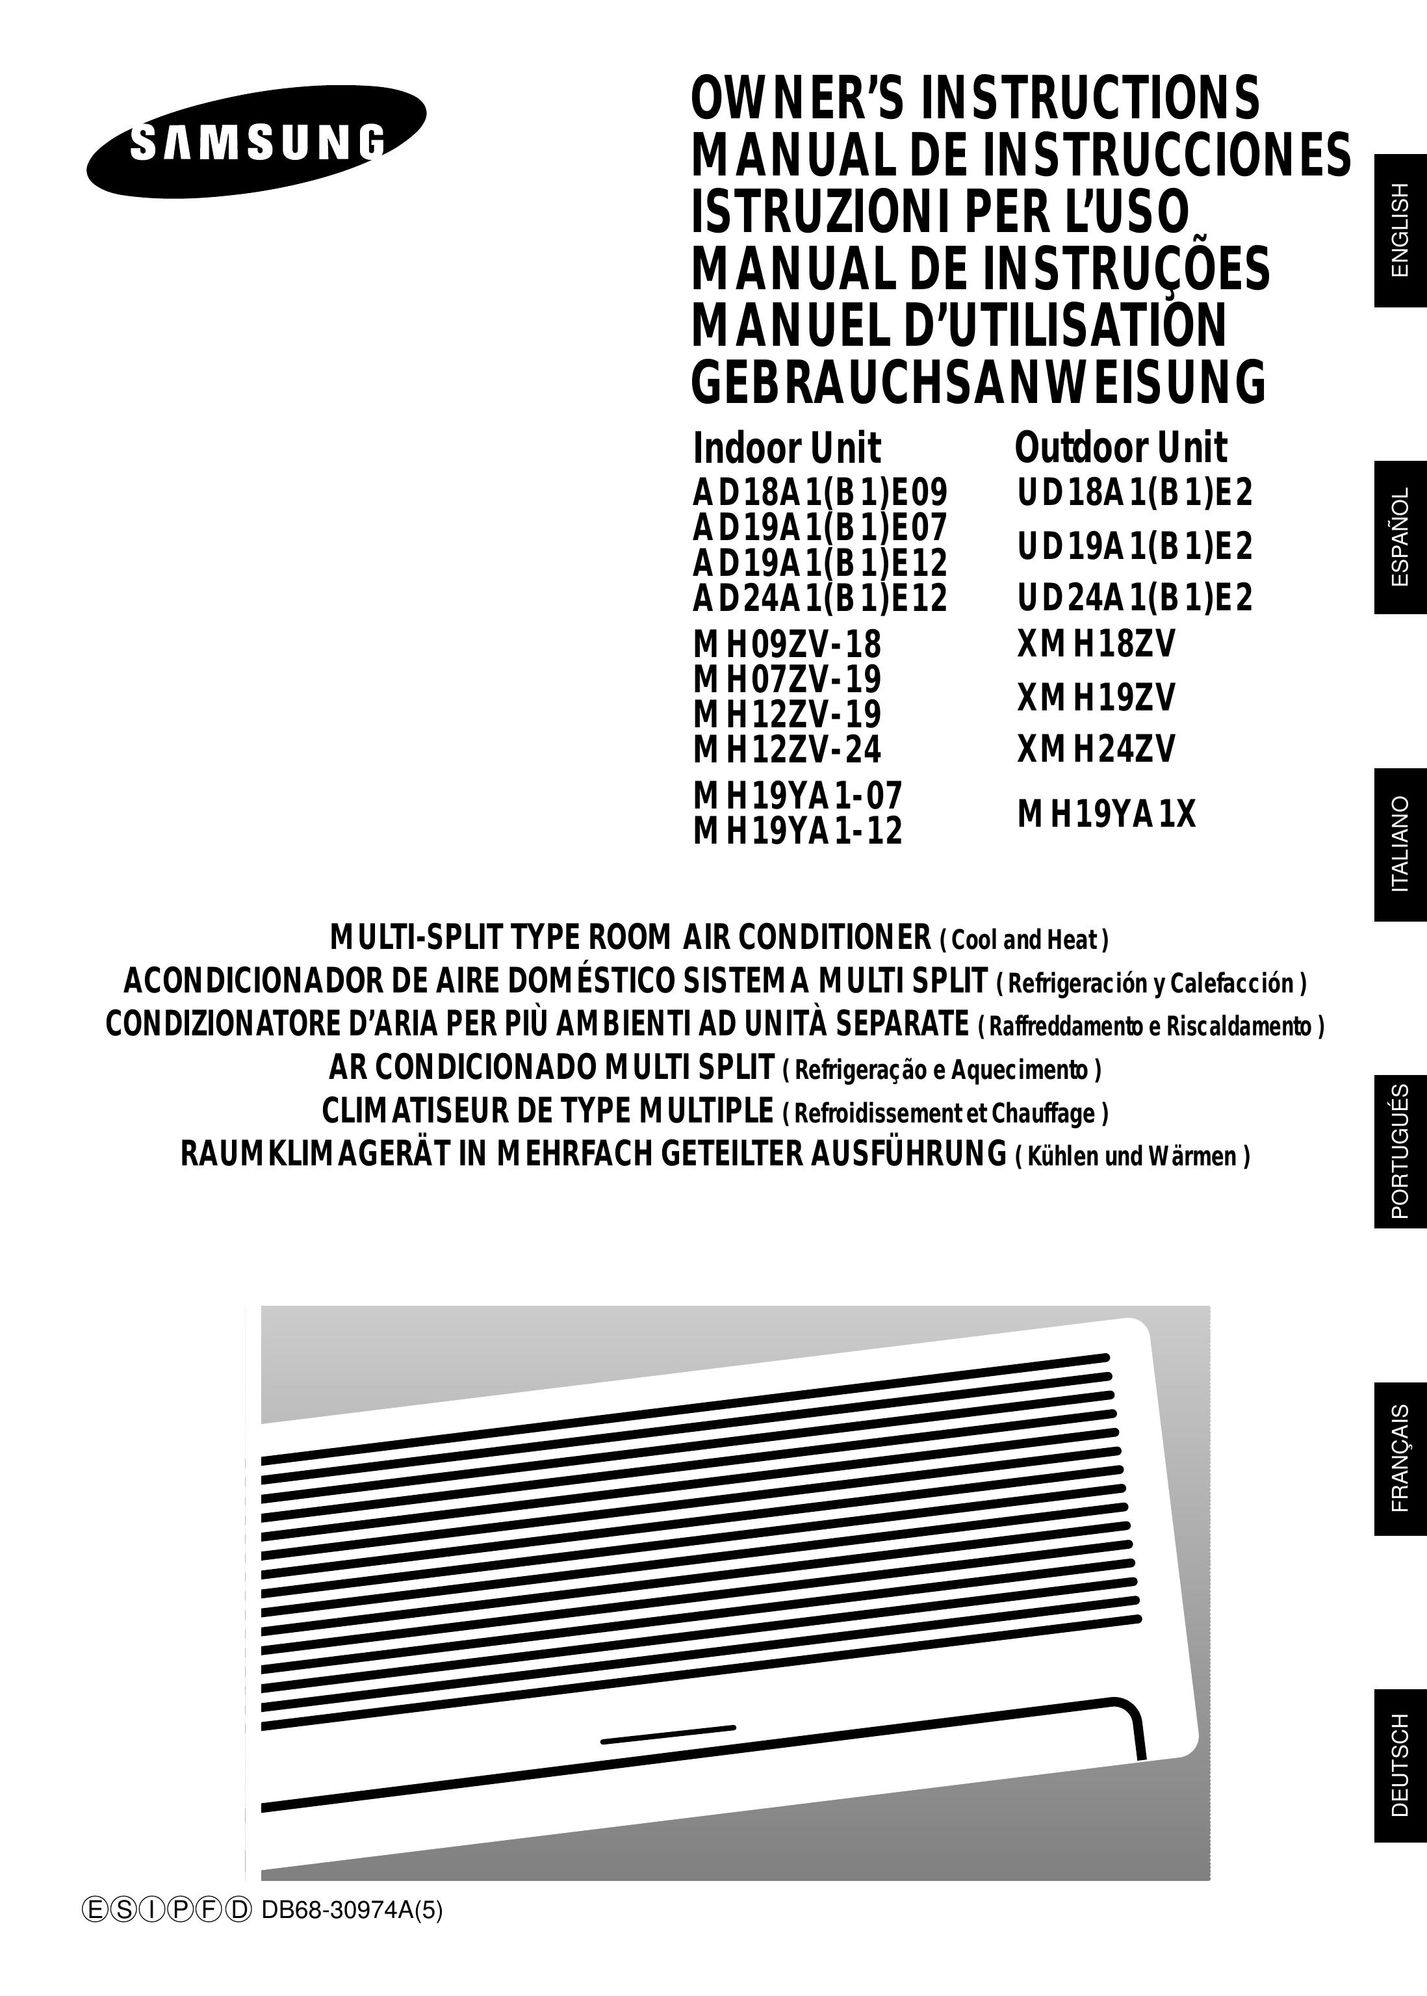 Samsung AD18A1(B1)E09 Air Conditioner User Manual